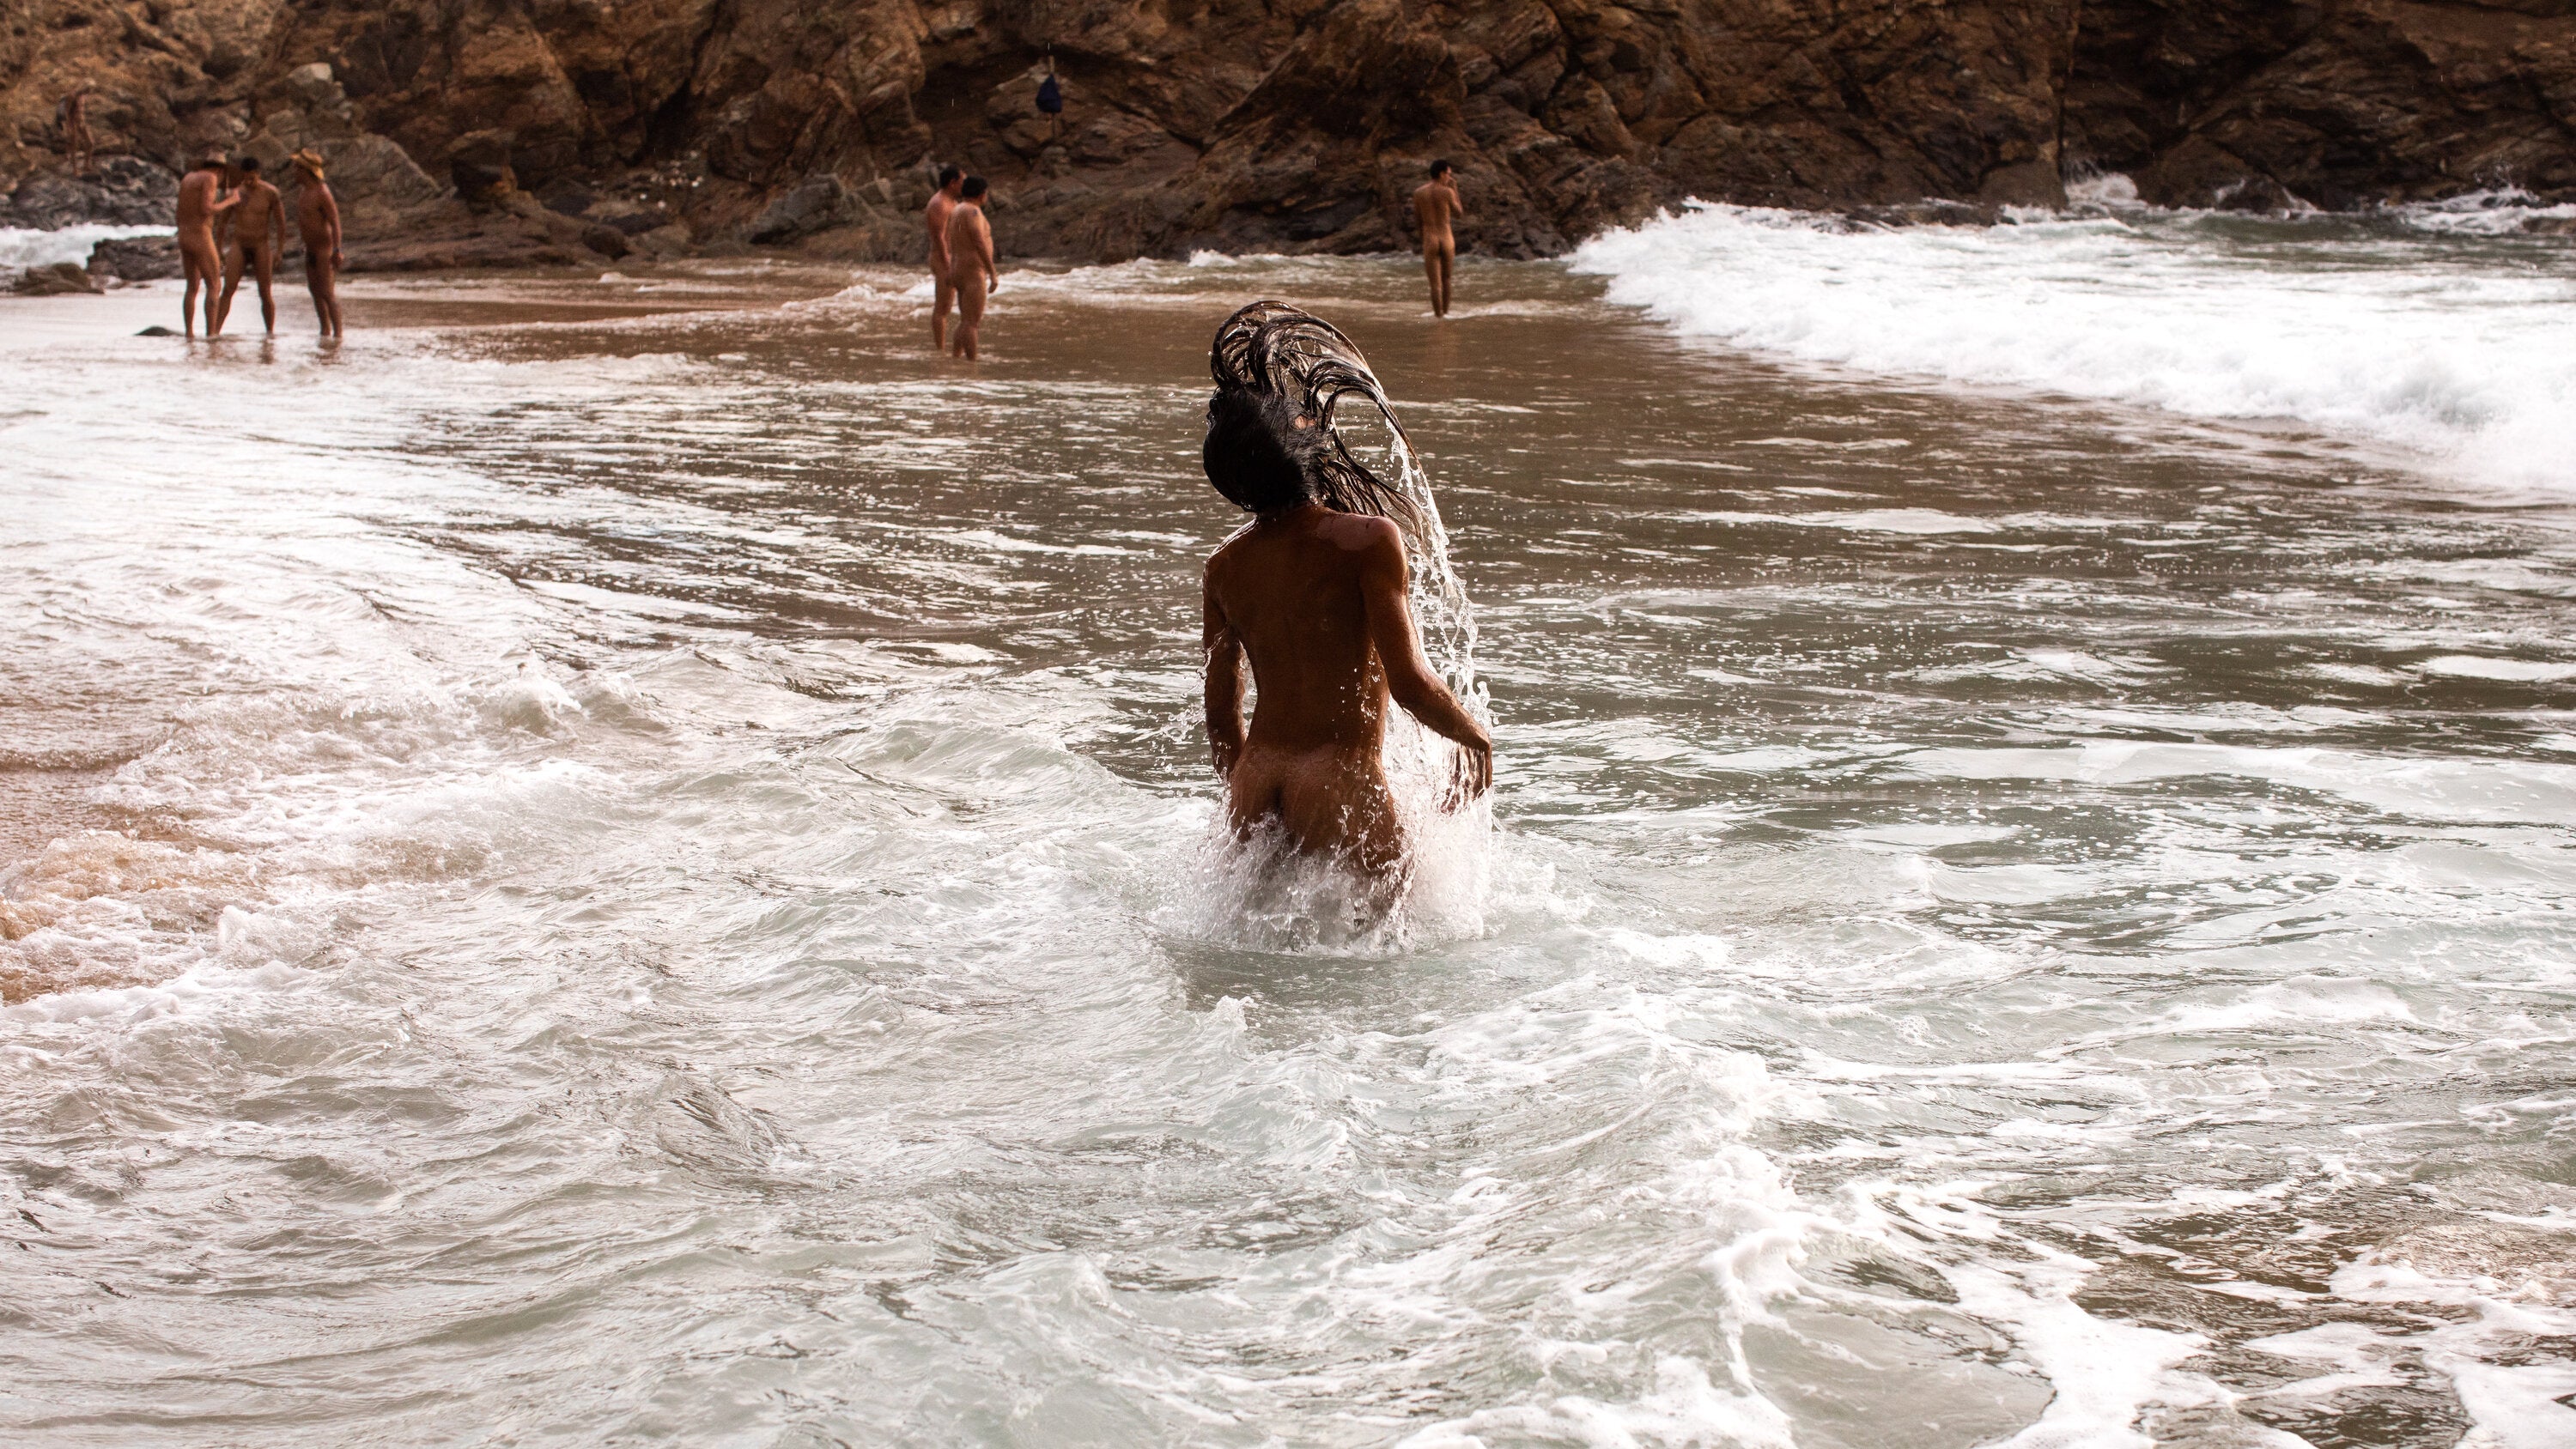 aw yeong recommends playas nudistas para familias pic